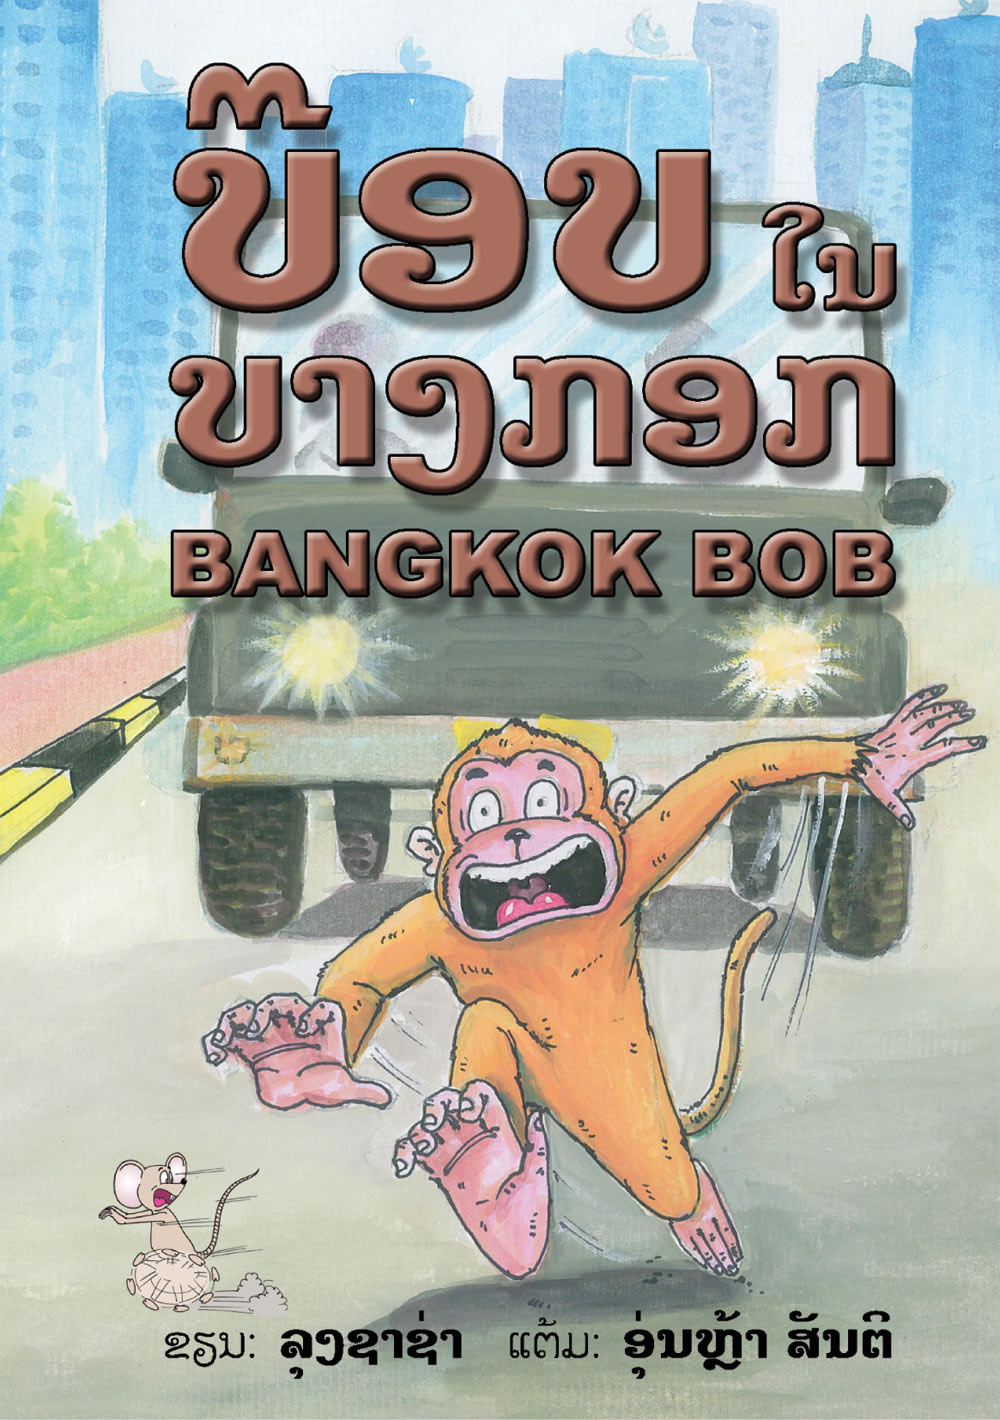 Bangkok Bob large book cover, published in Lao language